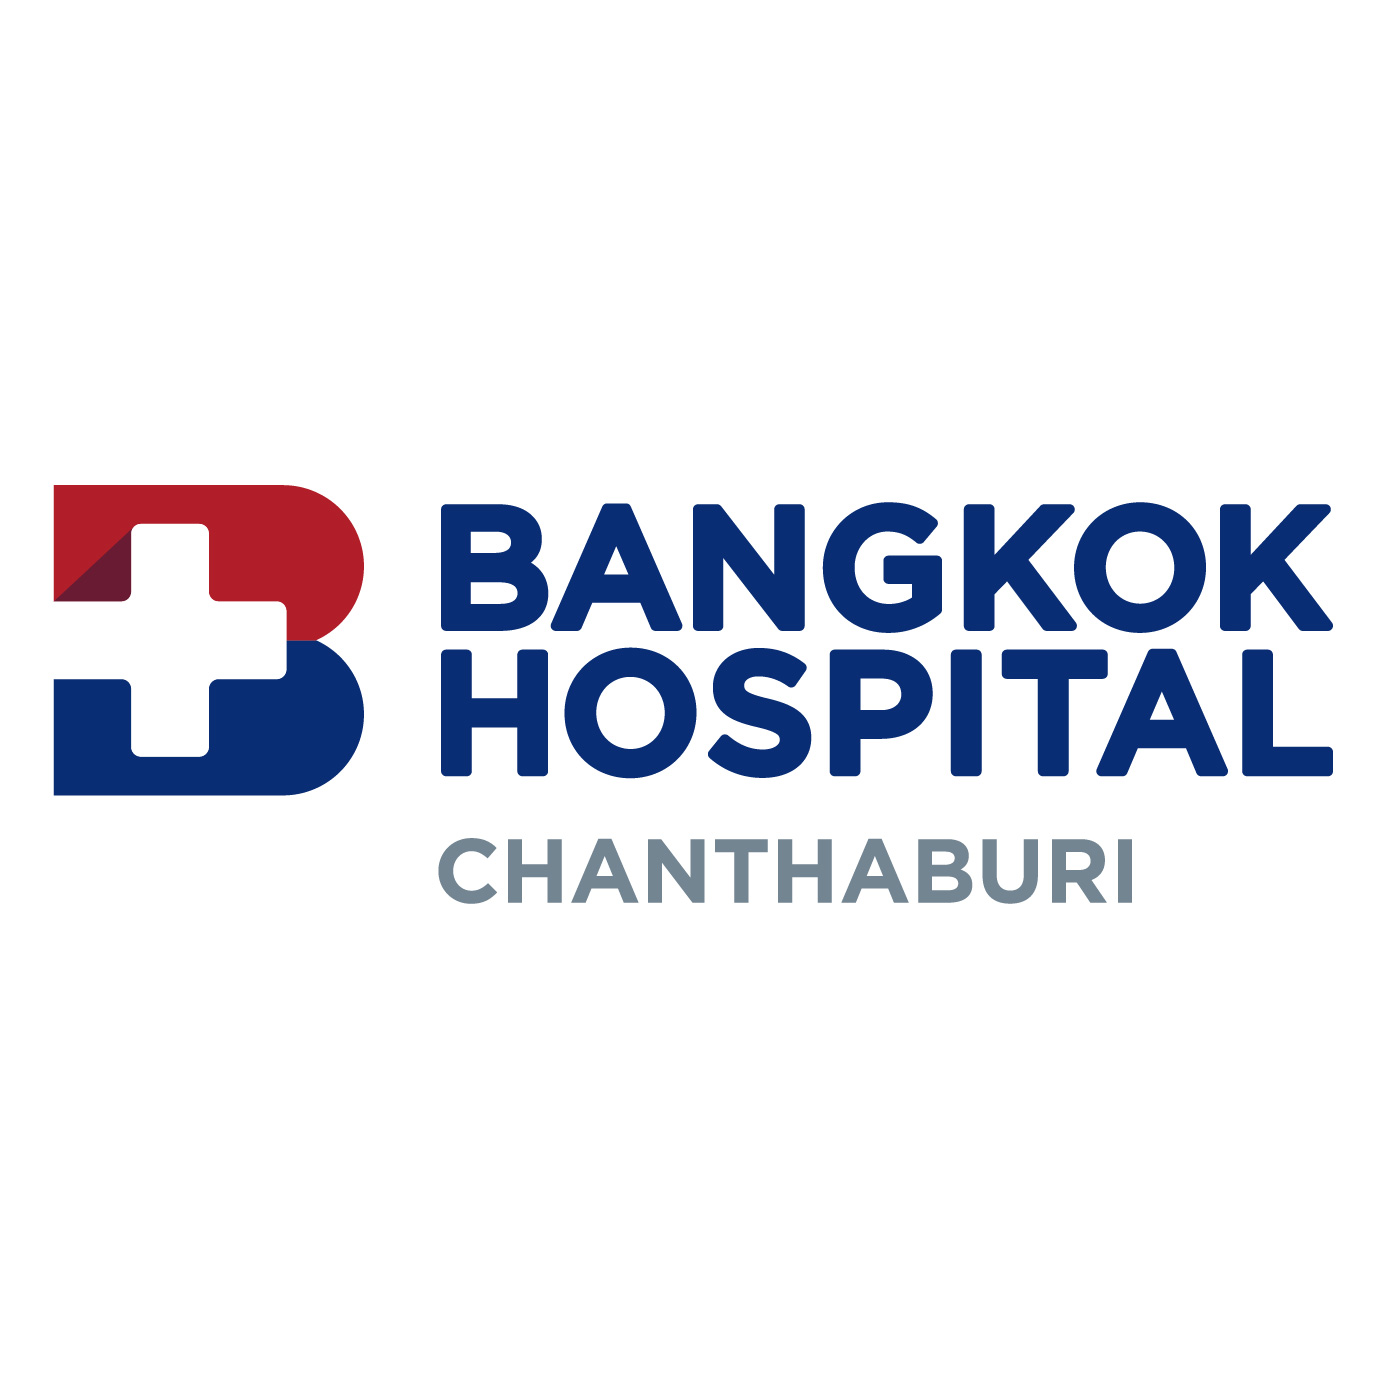 Bangkok Hospital Chanthaburi 01